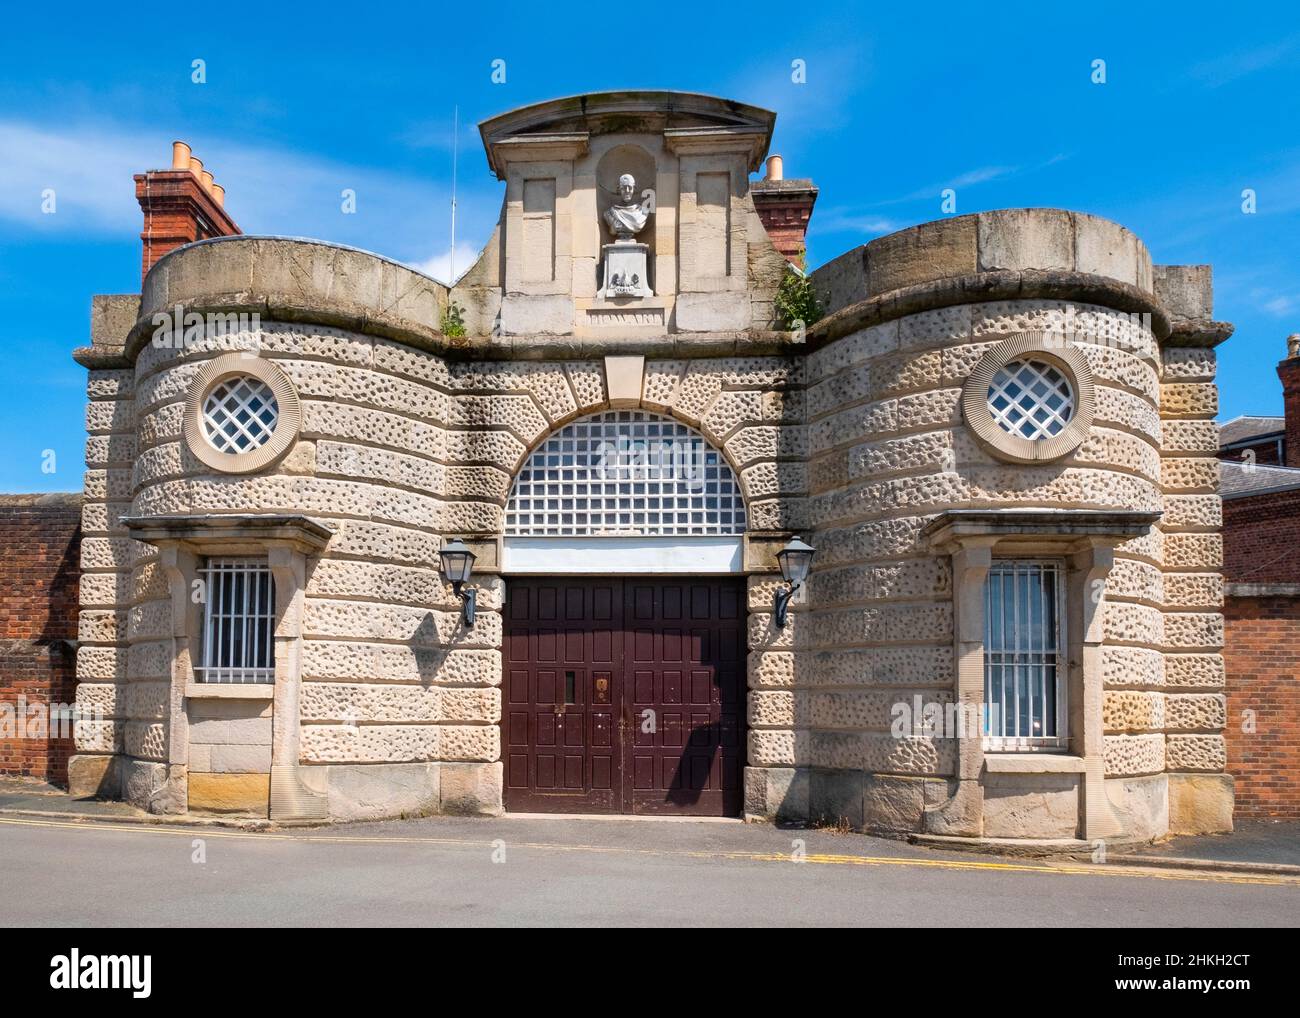 The Dana prison, Shrewsbury, Shropshire. Stock Photo